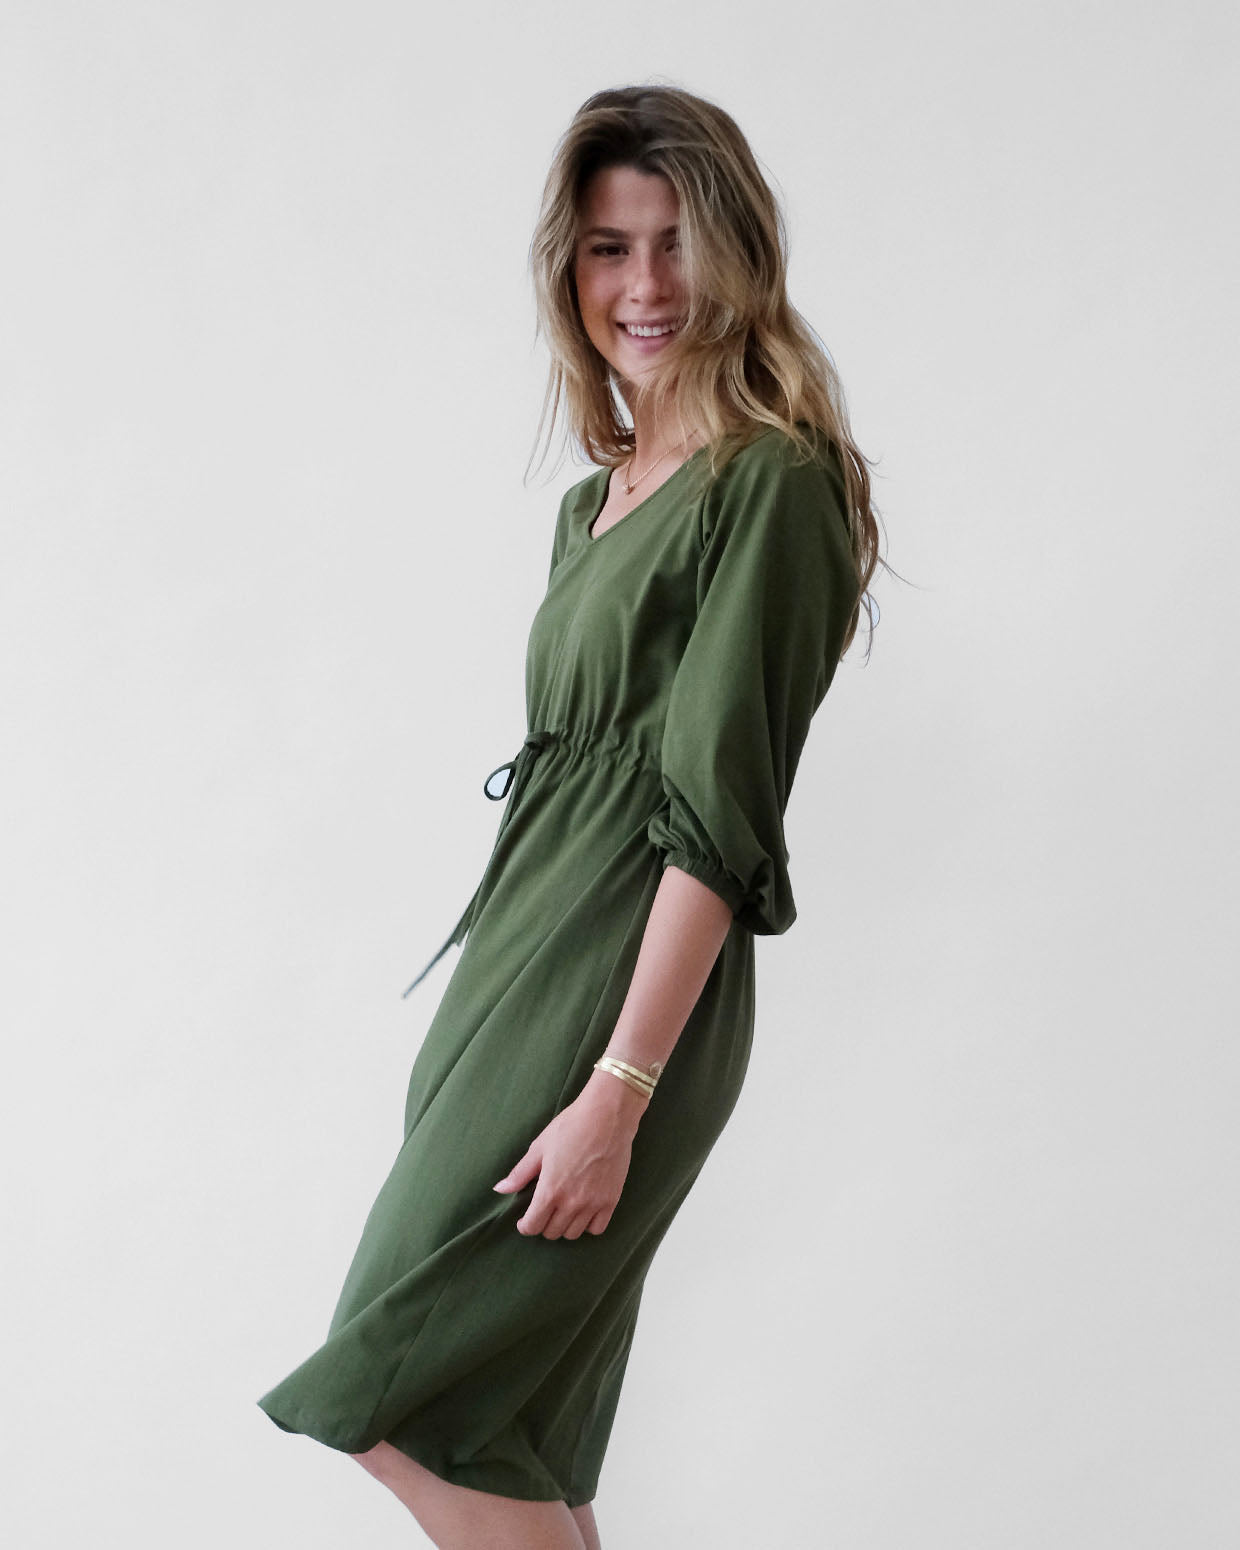 MARIGOLD dress in Olive